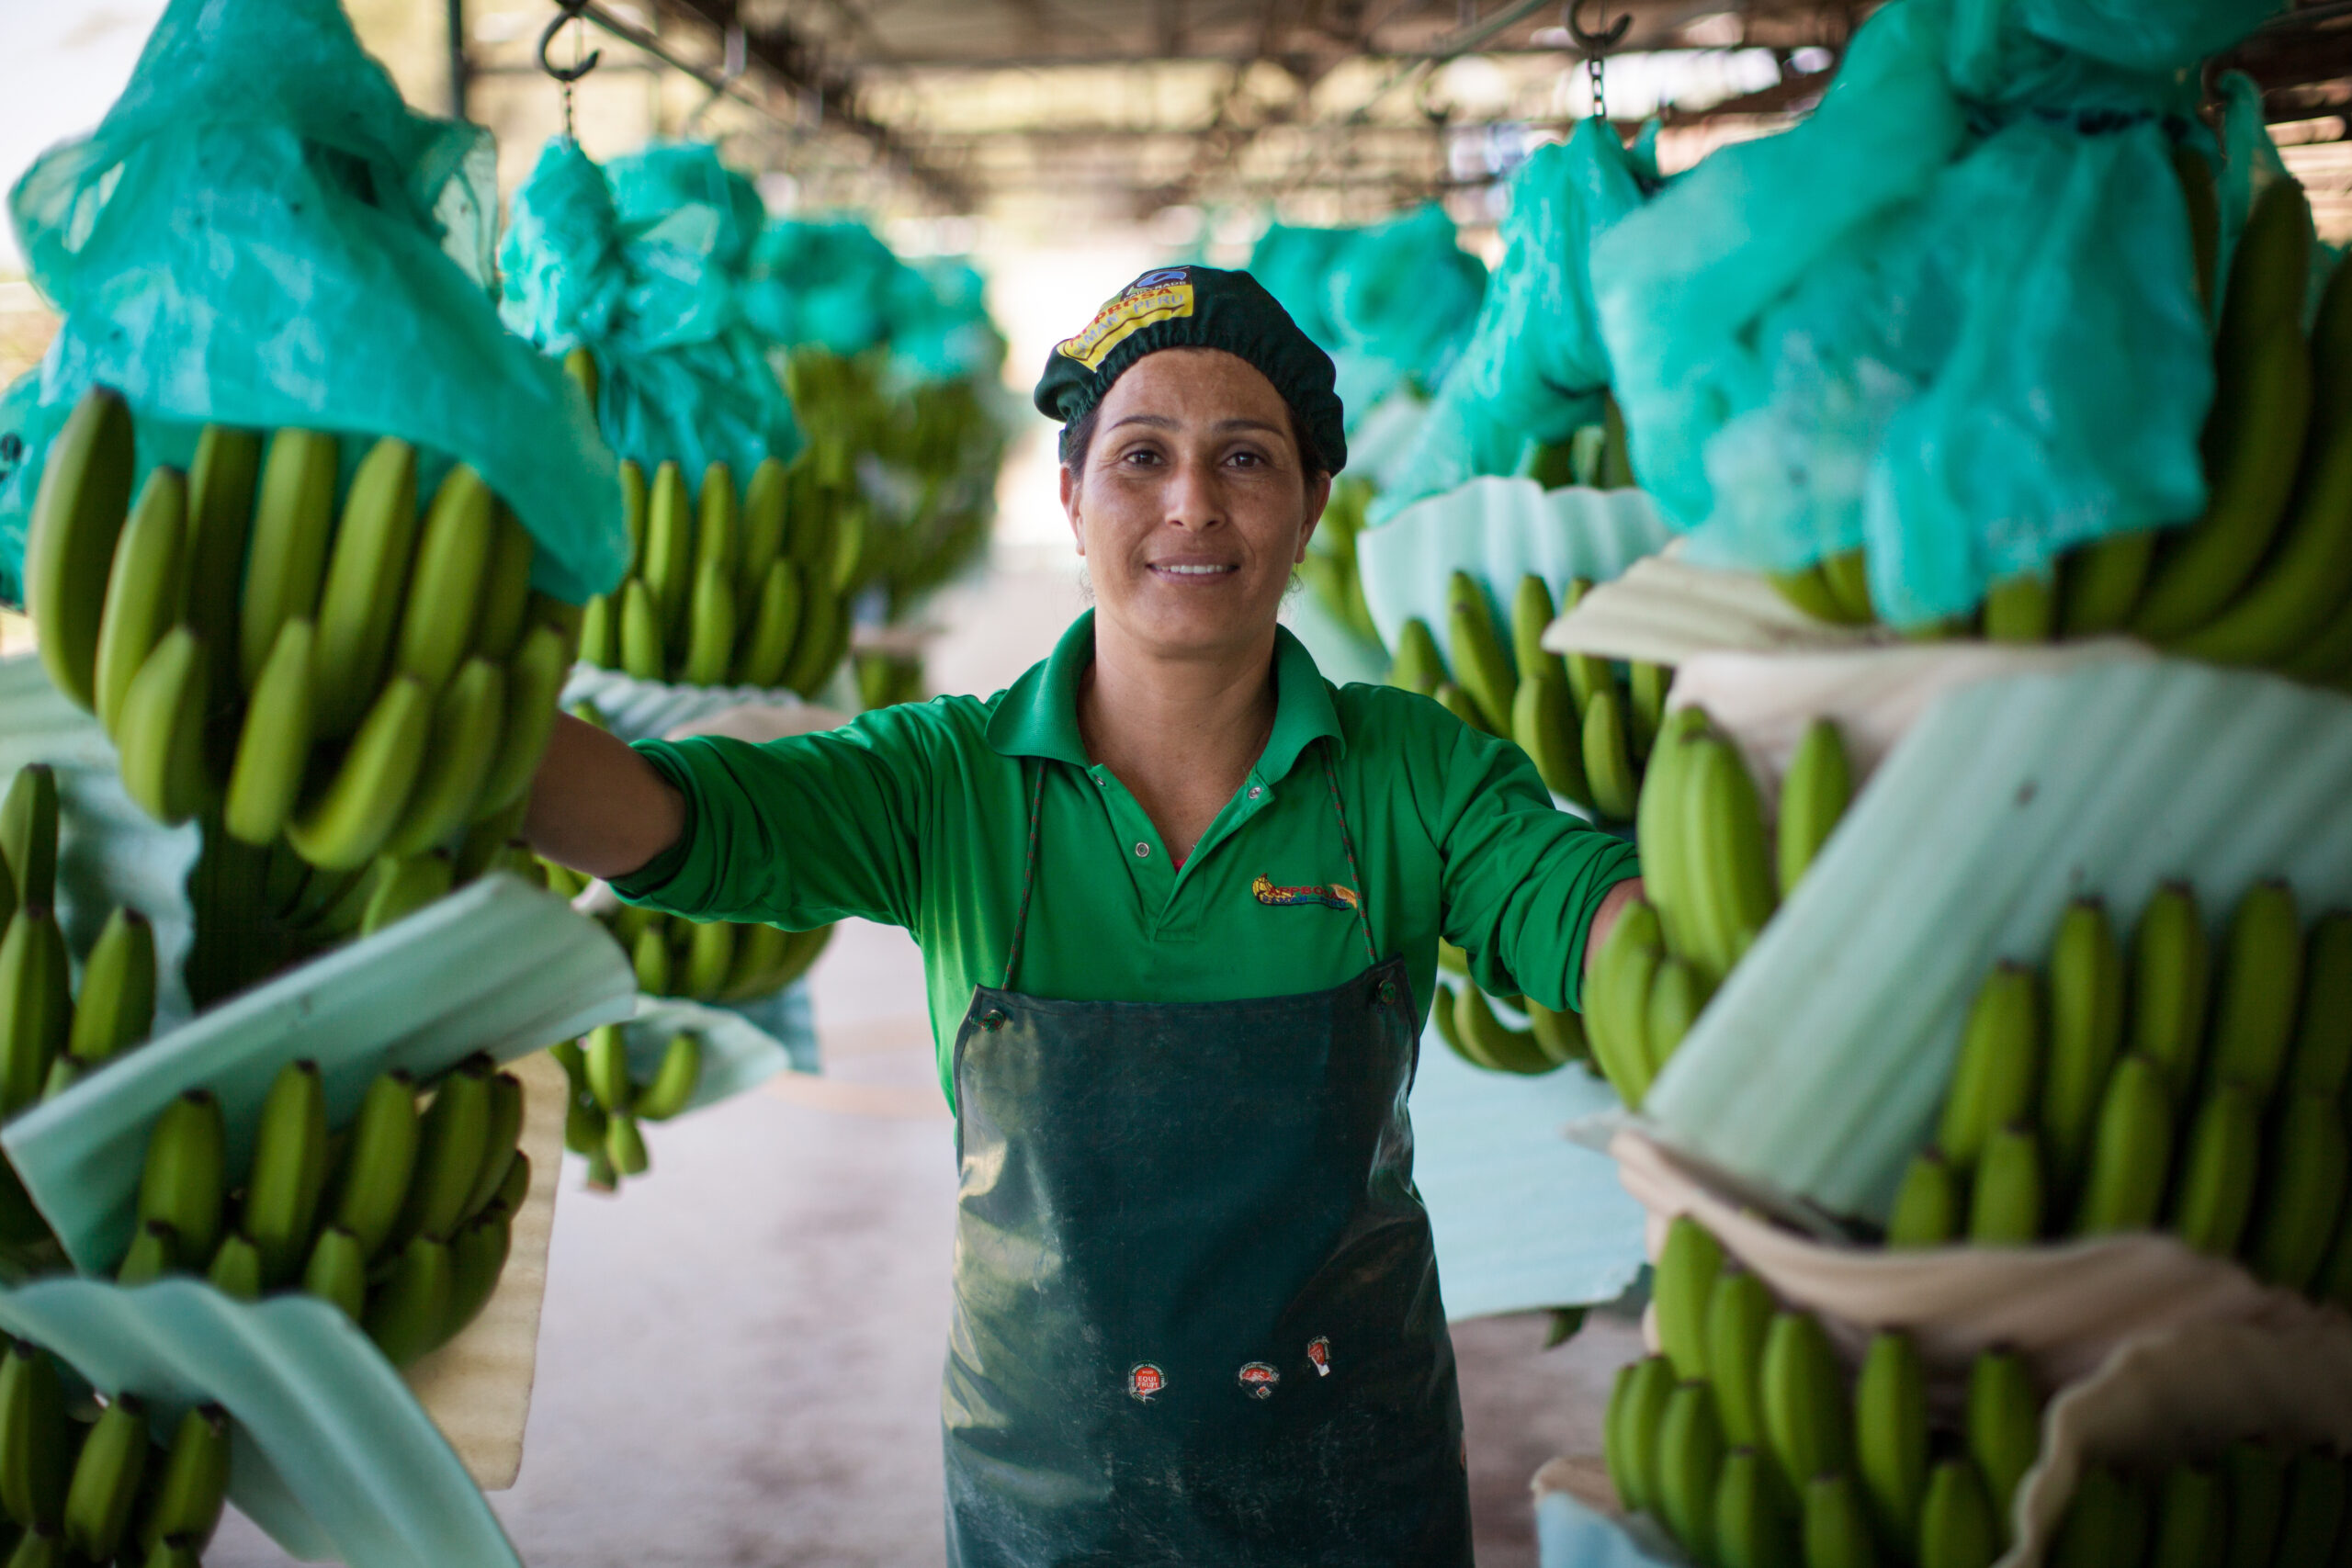 Doris Marchena prepares organic Fairtrade bananas in one of several processing plants at Fairtrade-certified banana producers APPBOSA in Samán, Marcavelica, Piura, Peru.